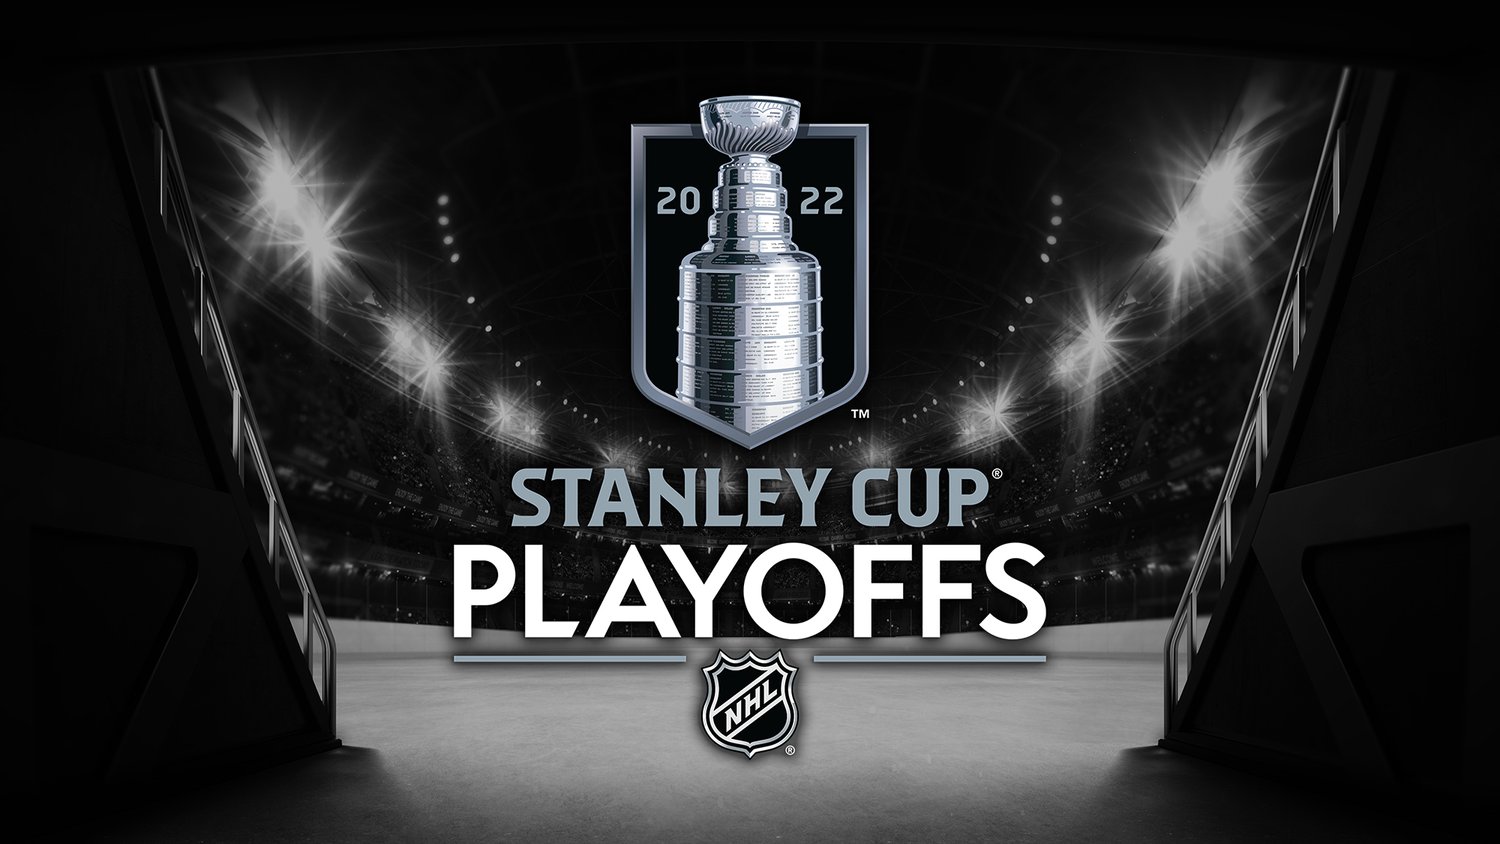 National Emblem NHL 2015 Stanley Cup Logo Patch